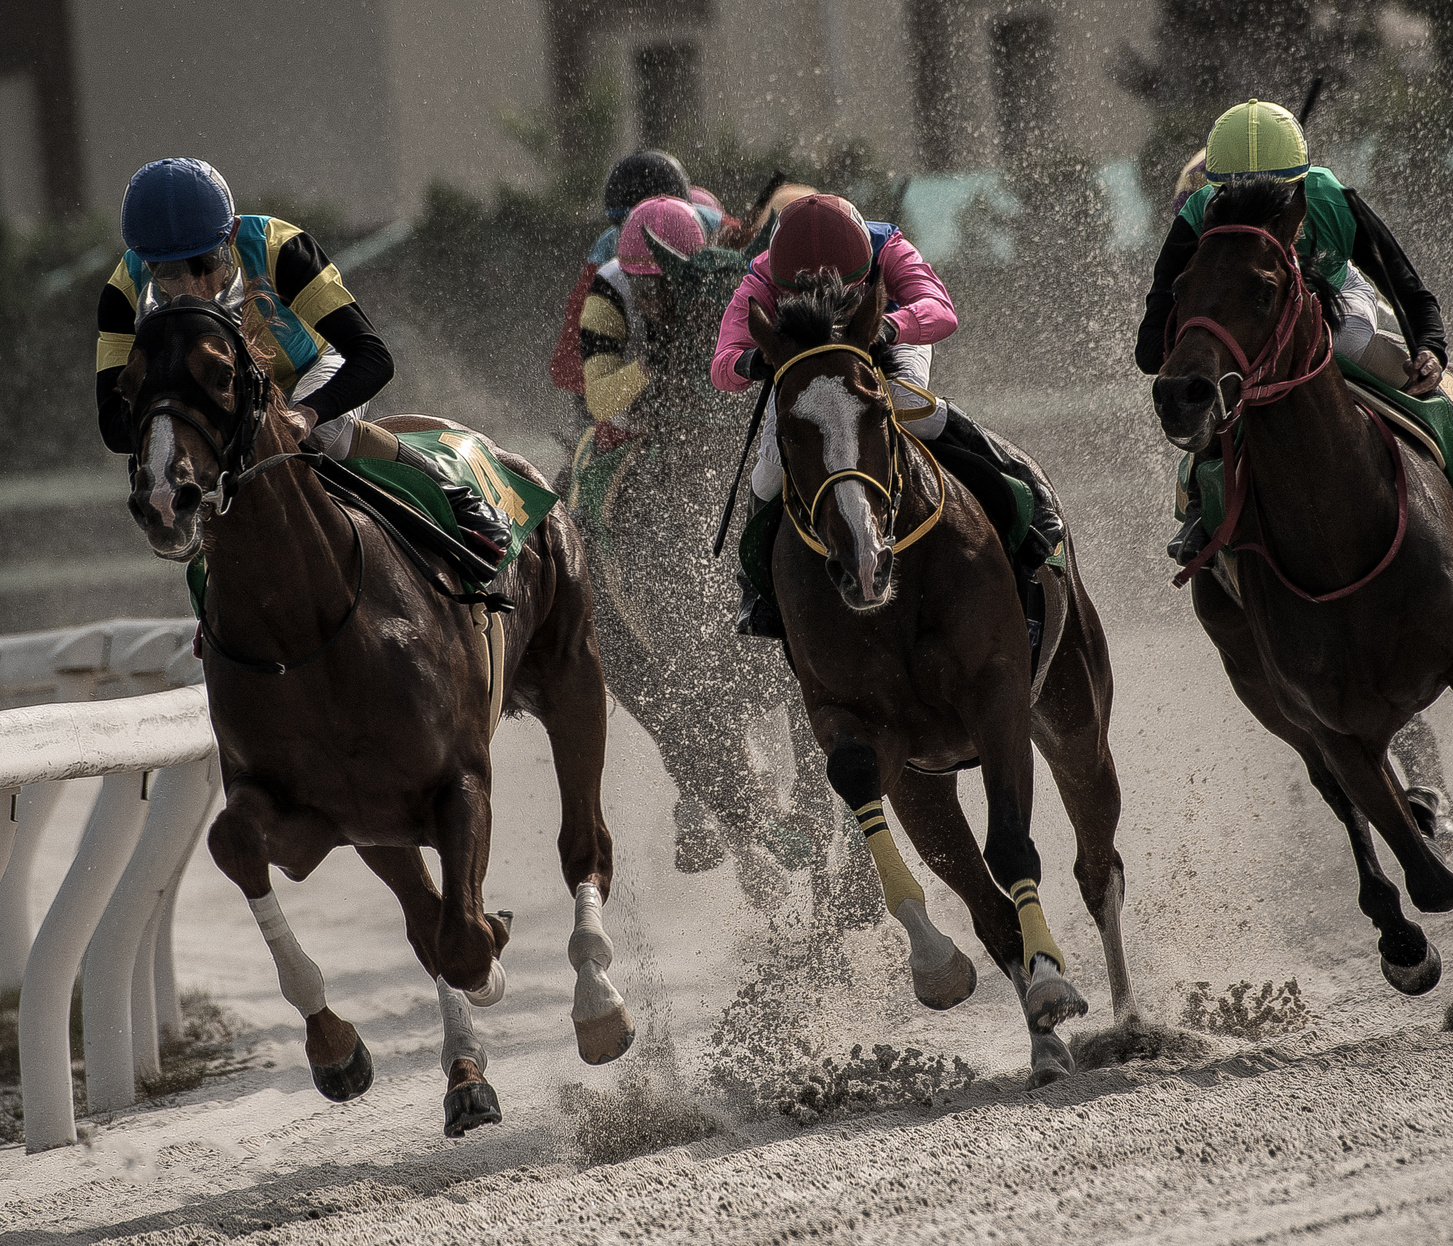 Competitive Horse Racing in Heavy Sandstorm